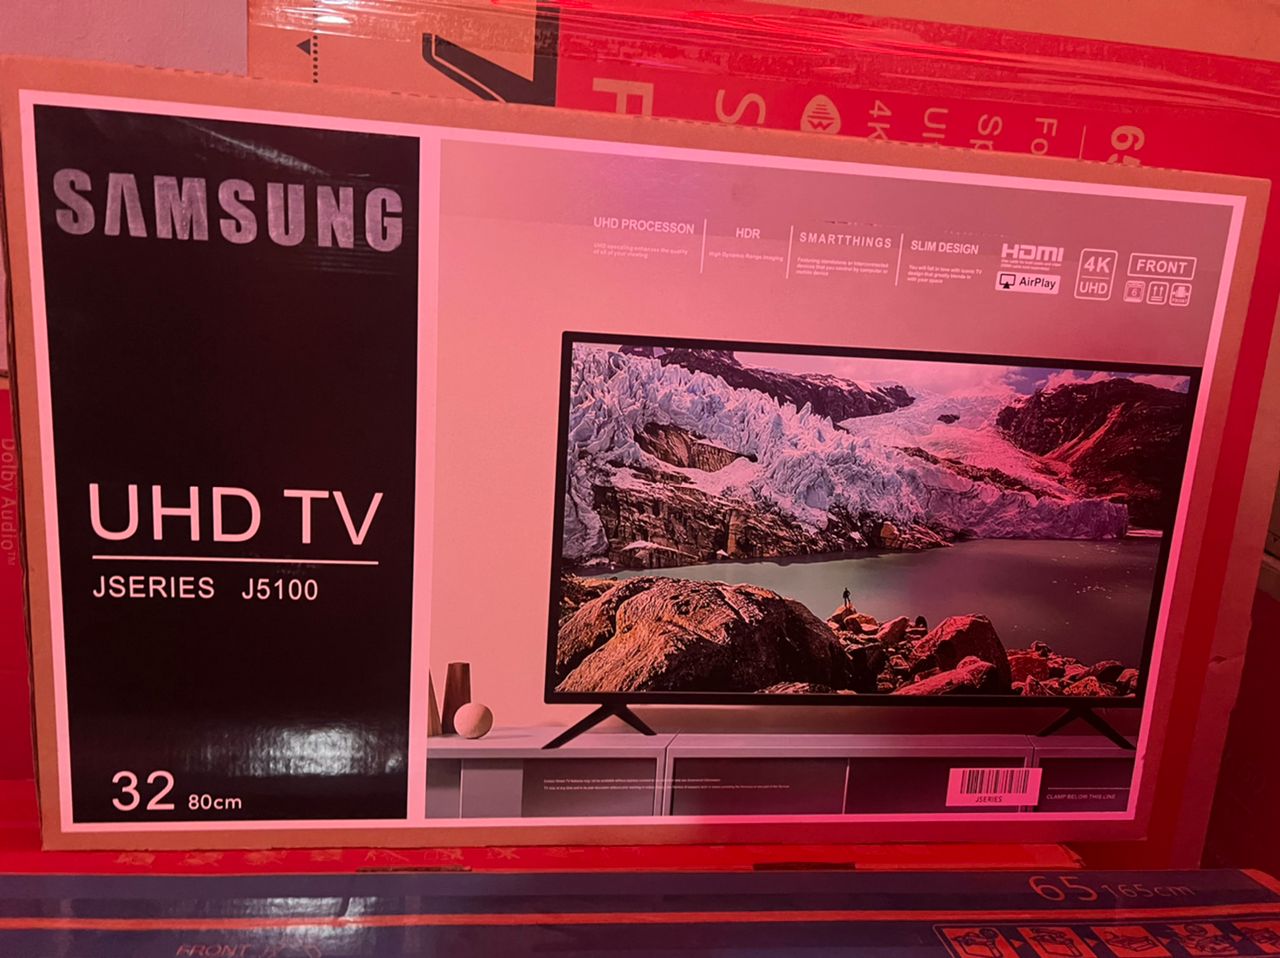 32" Samsung UHD TV JSERIES J5100